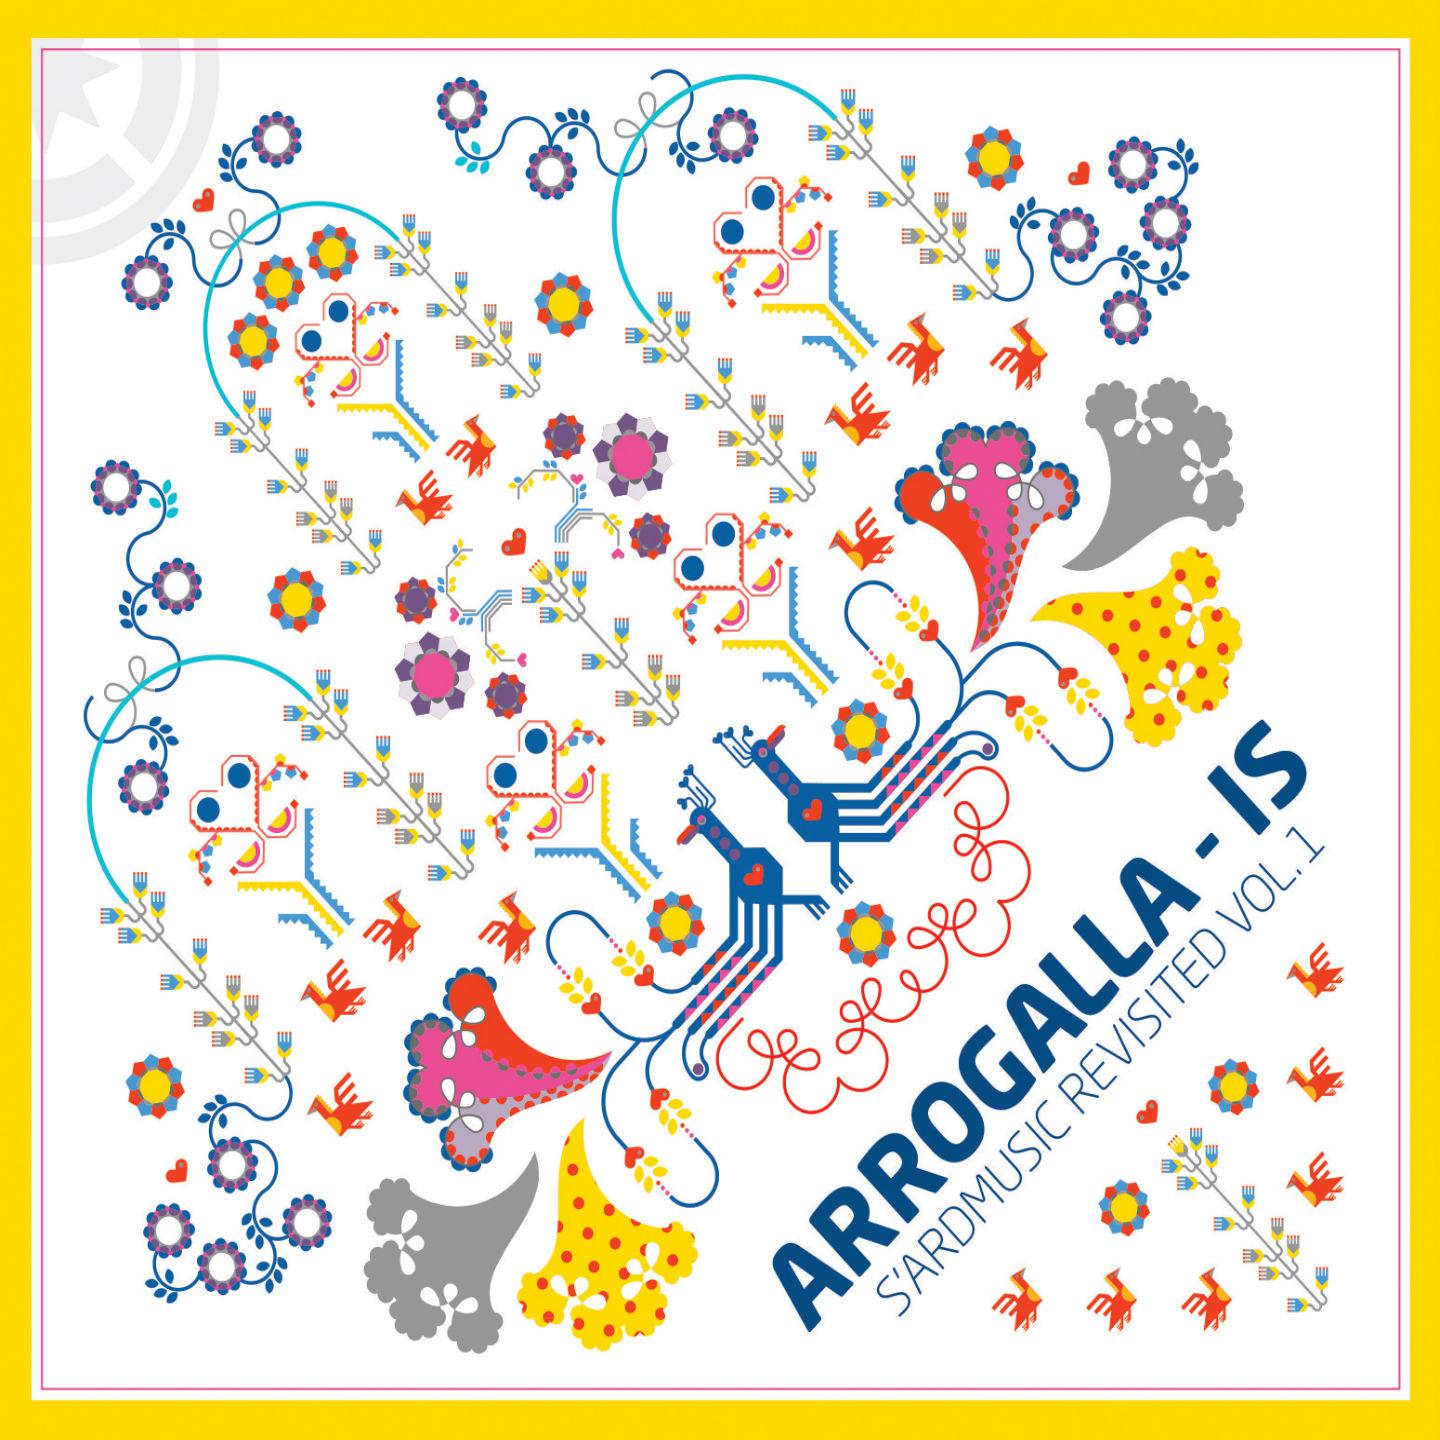 Arrogalla - Se